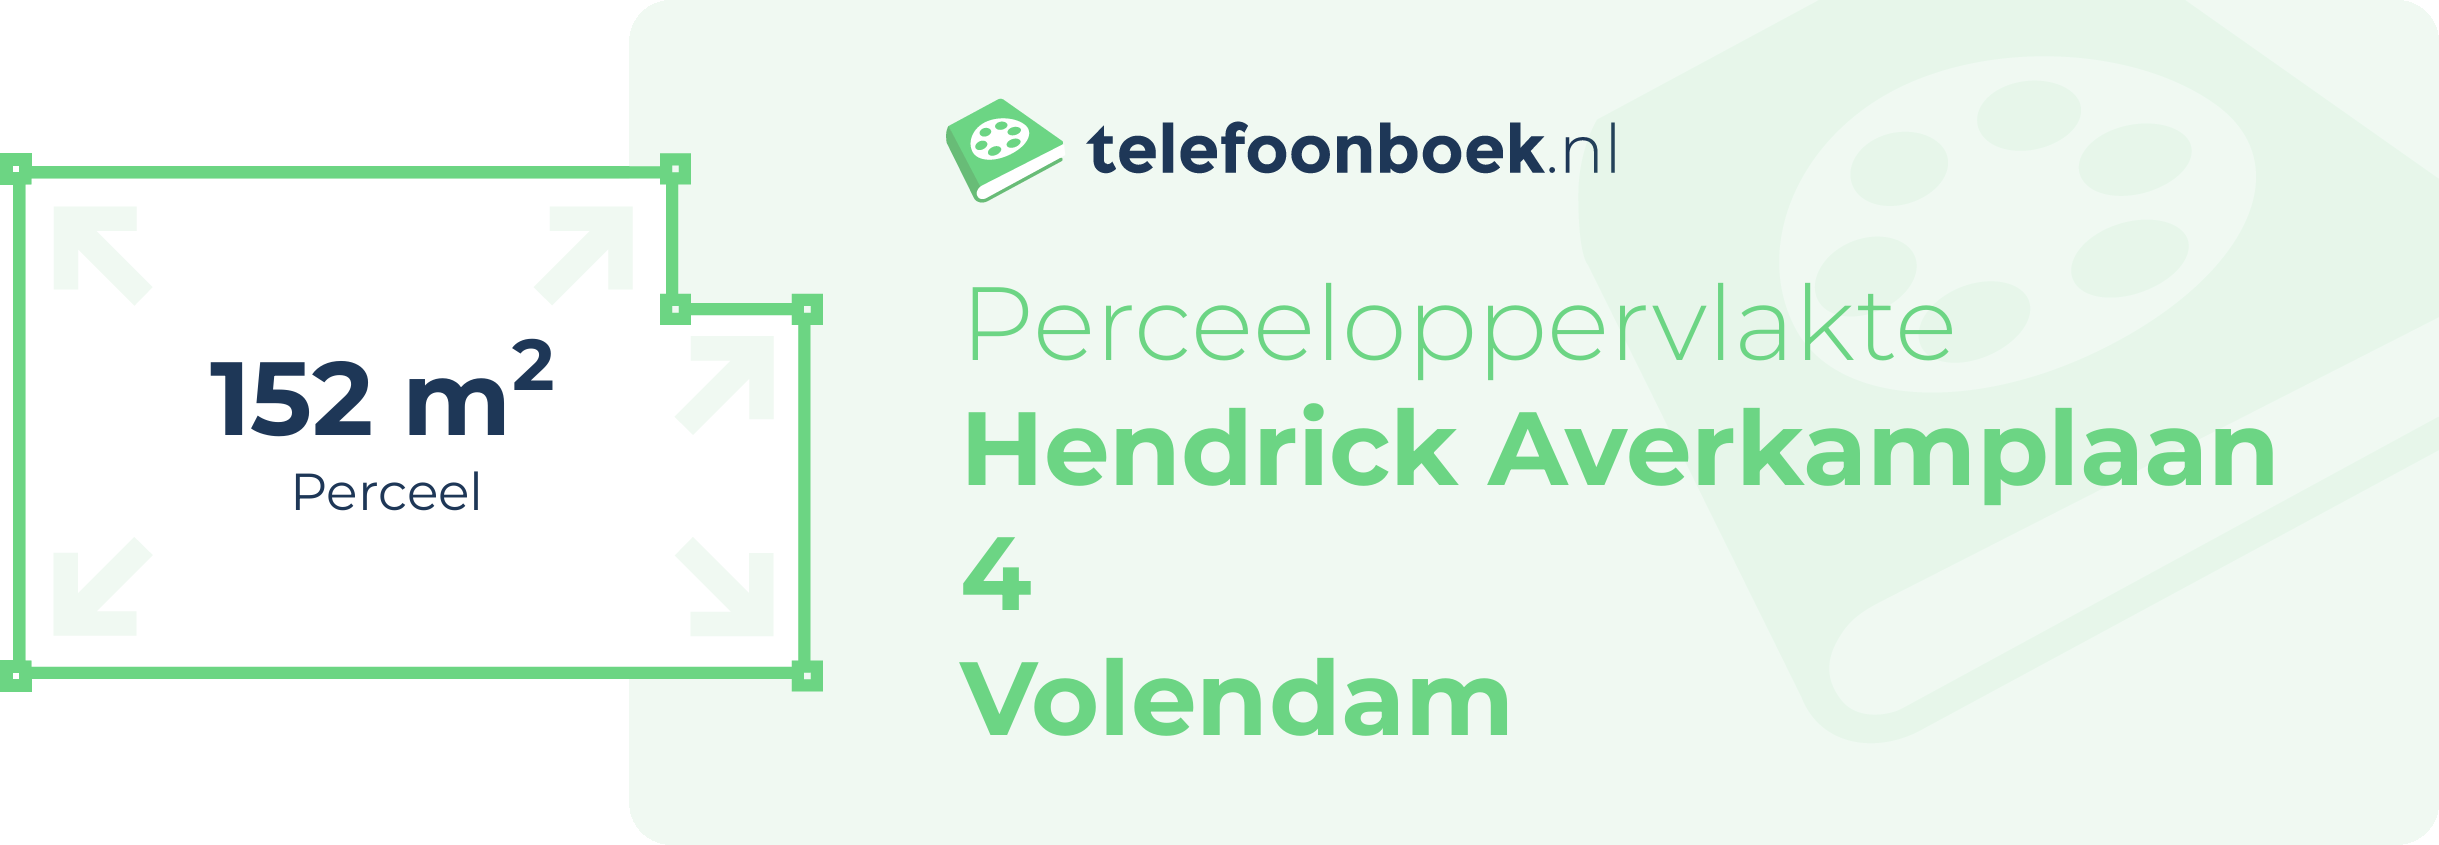 Perceeloppervlakte Hendrick Averkamplaan 4 Volendam